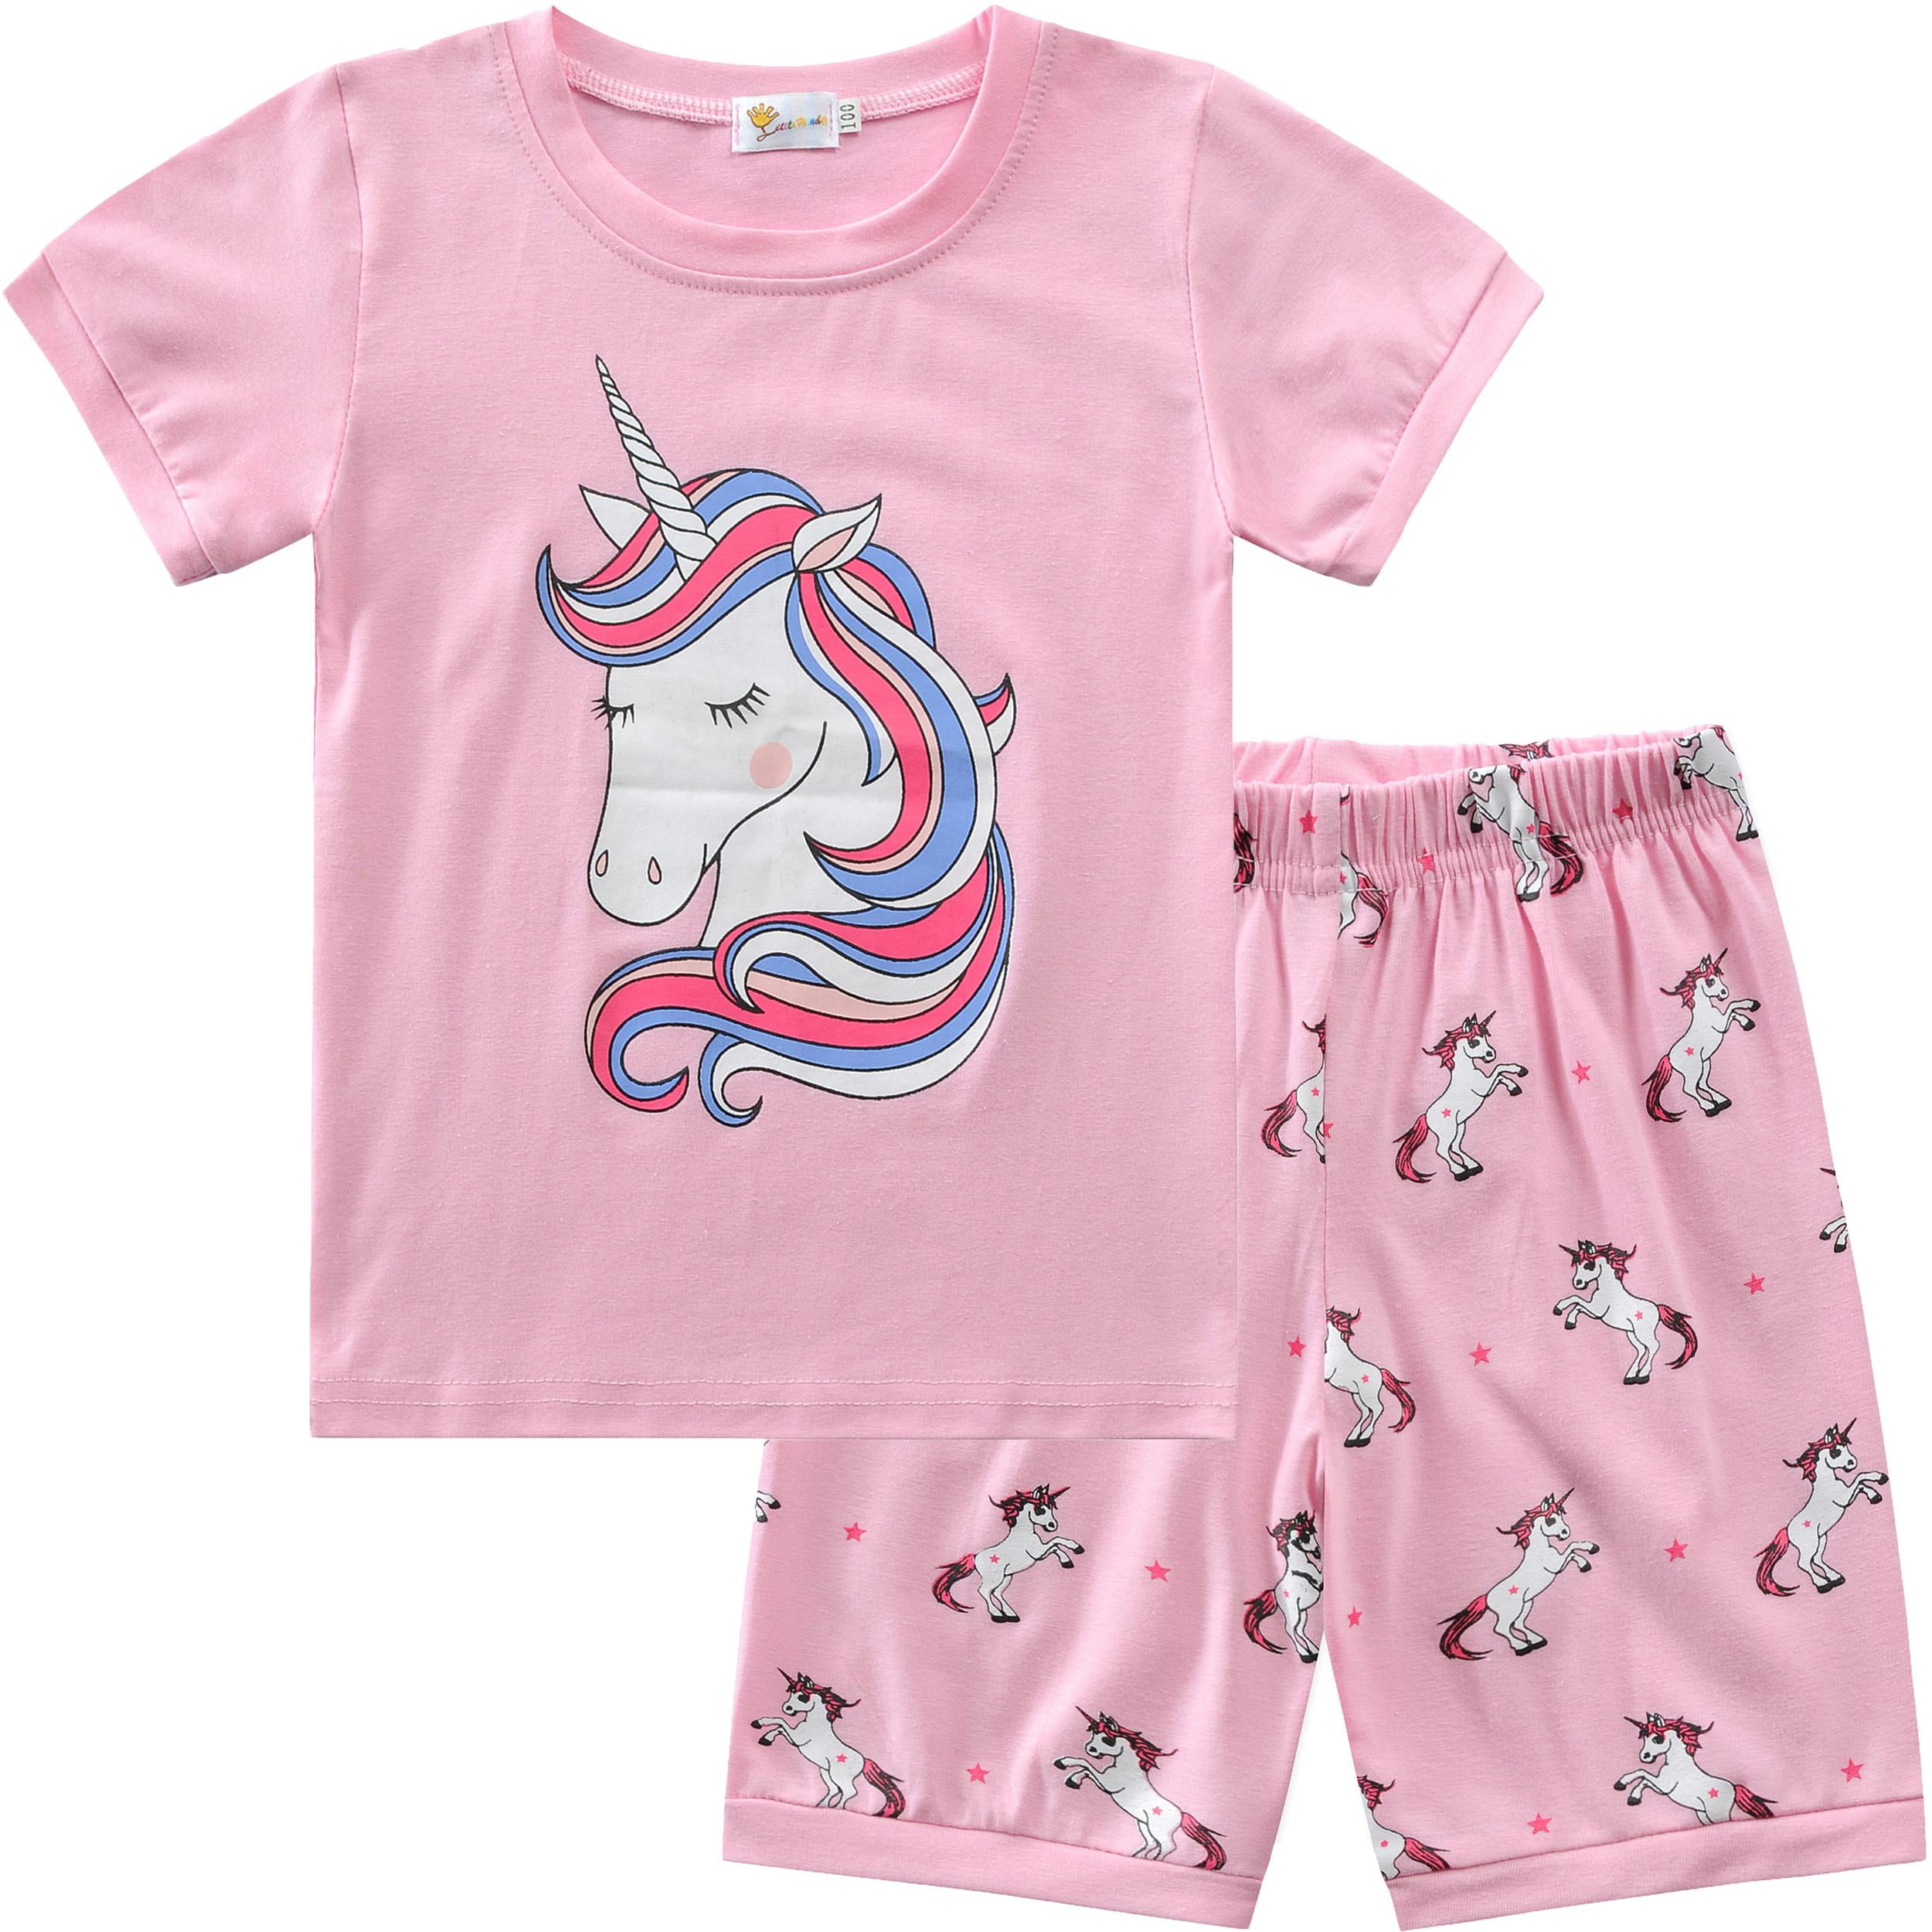 Little Hand Pajamas for Girls Short Sets Kids 100% Cotton Flamingos Sleepwear Toddler Pjs Summer Clothes Shirts